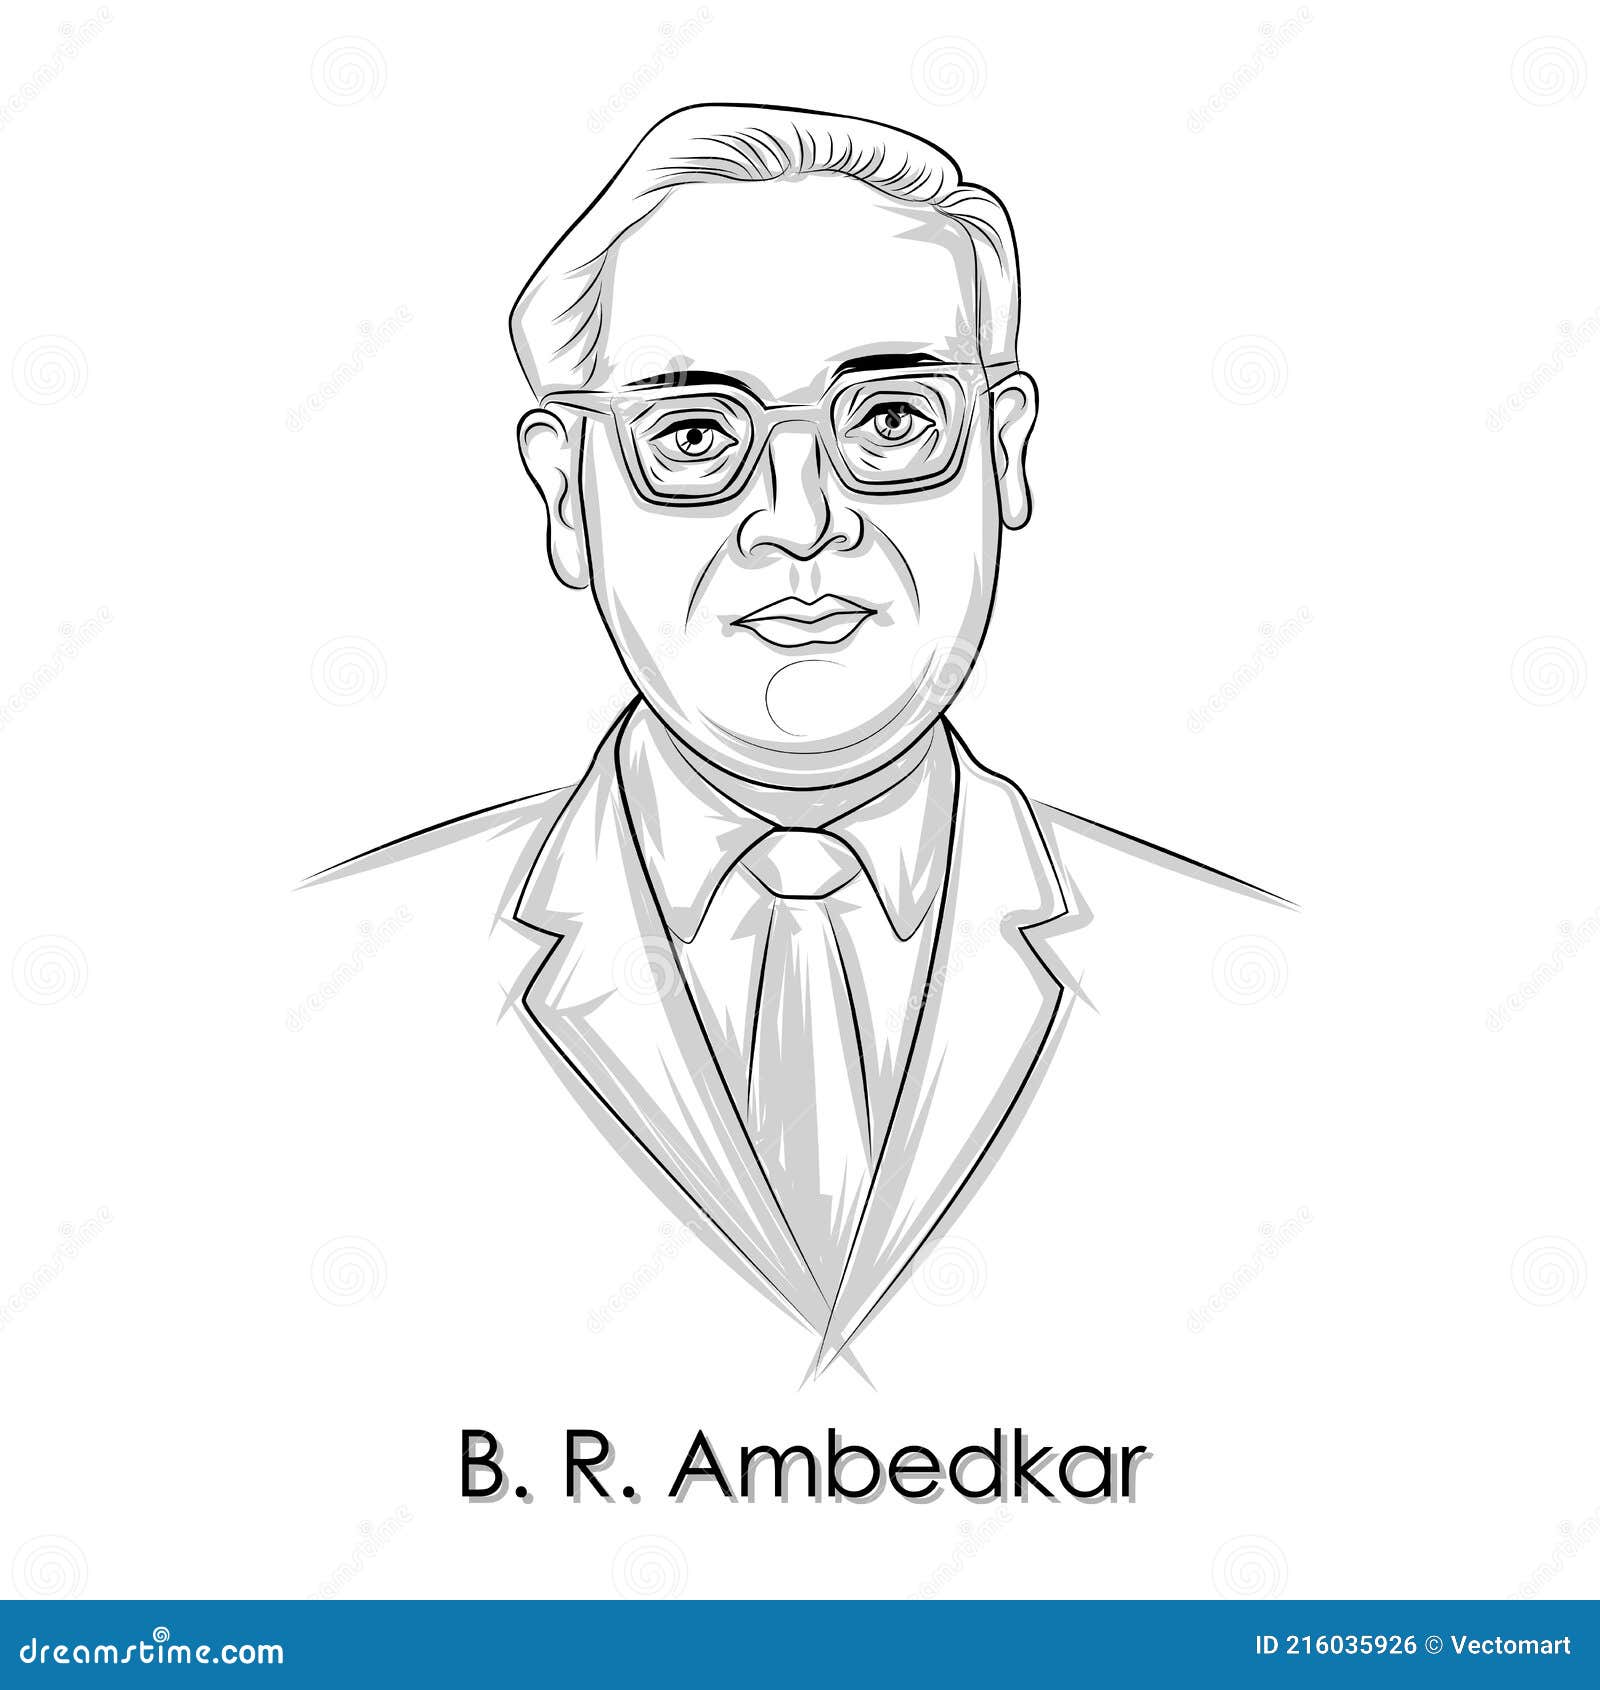 656 B R Ambedkar Images, Stock Photos & Vectors | Shutterstock